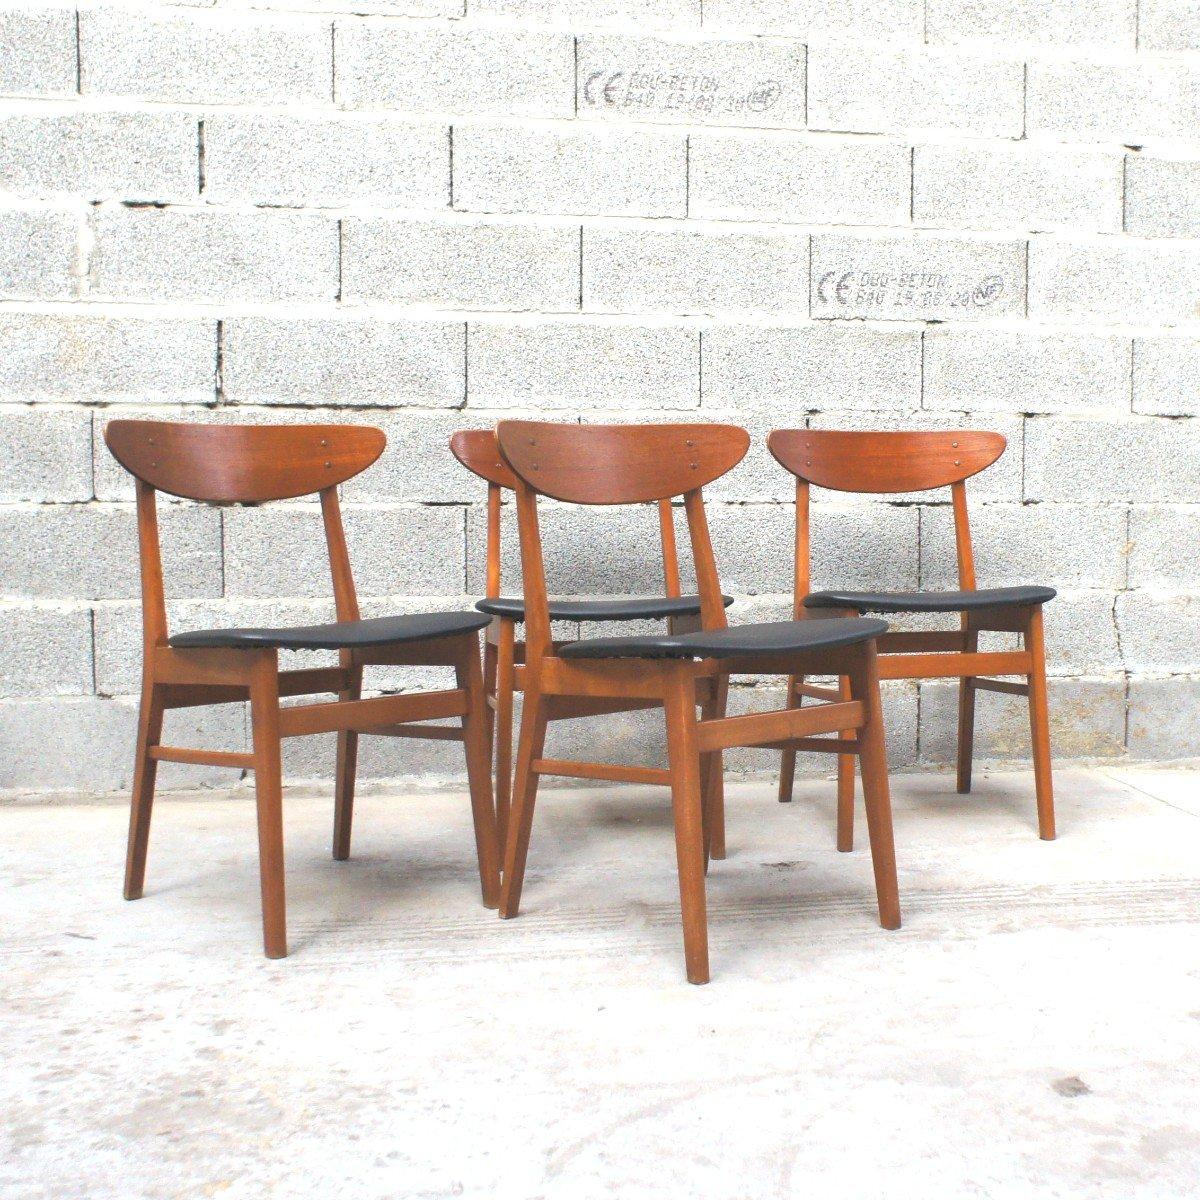 Series of 4 Authentic Scandinavian Chairs Farstrup 210 2